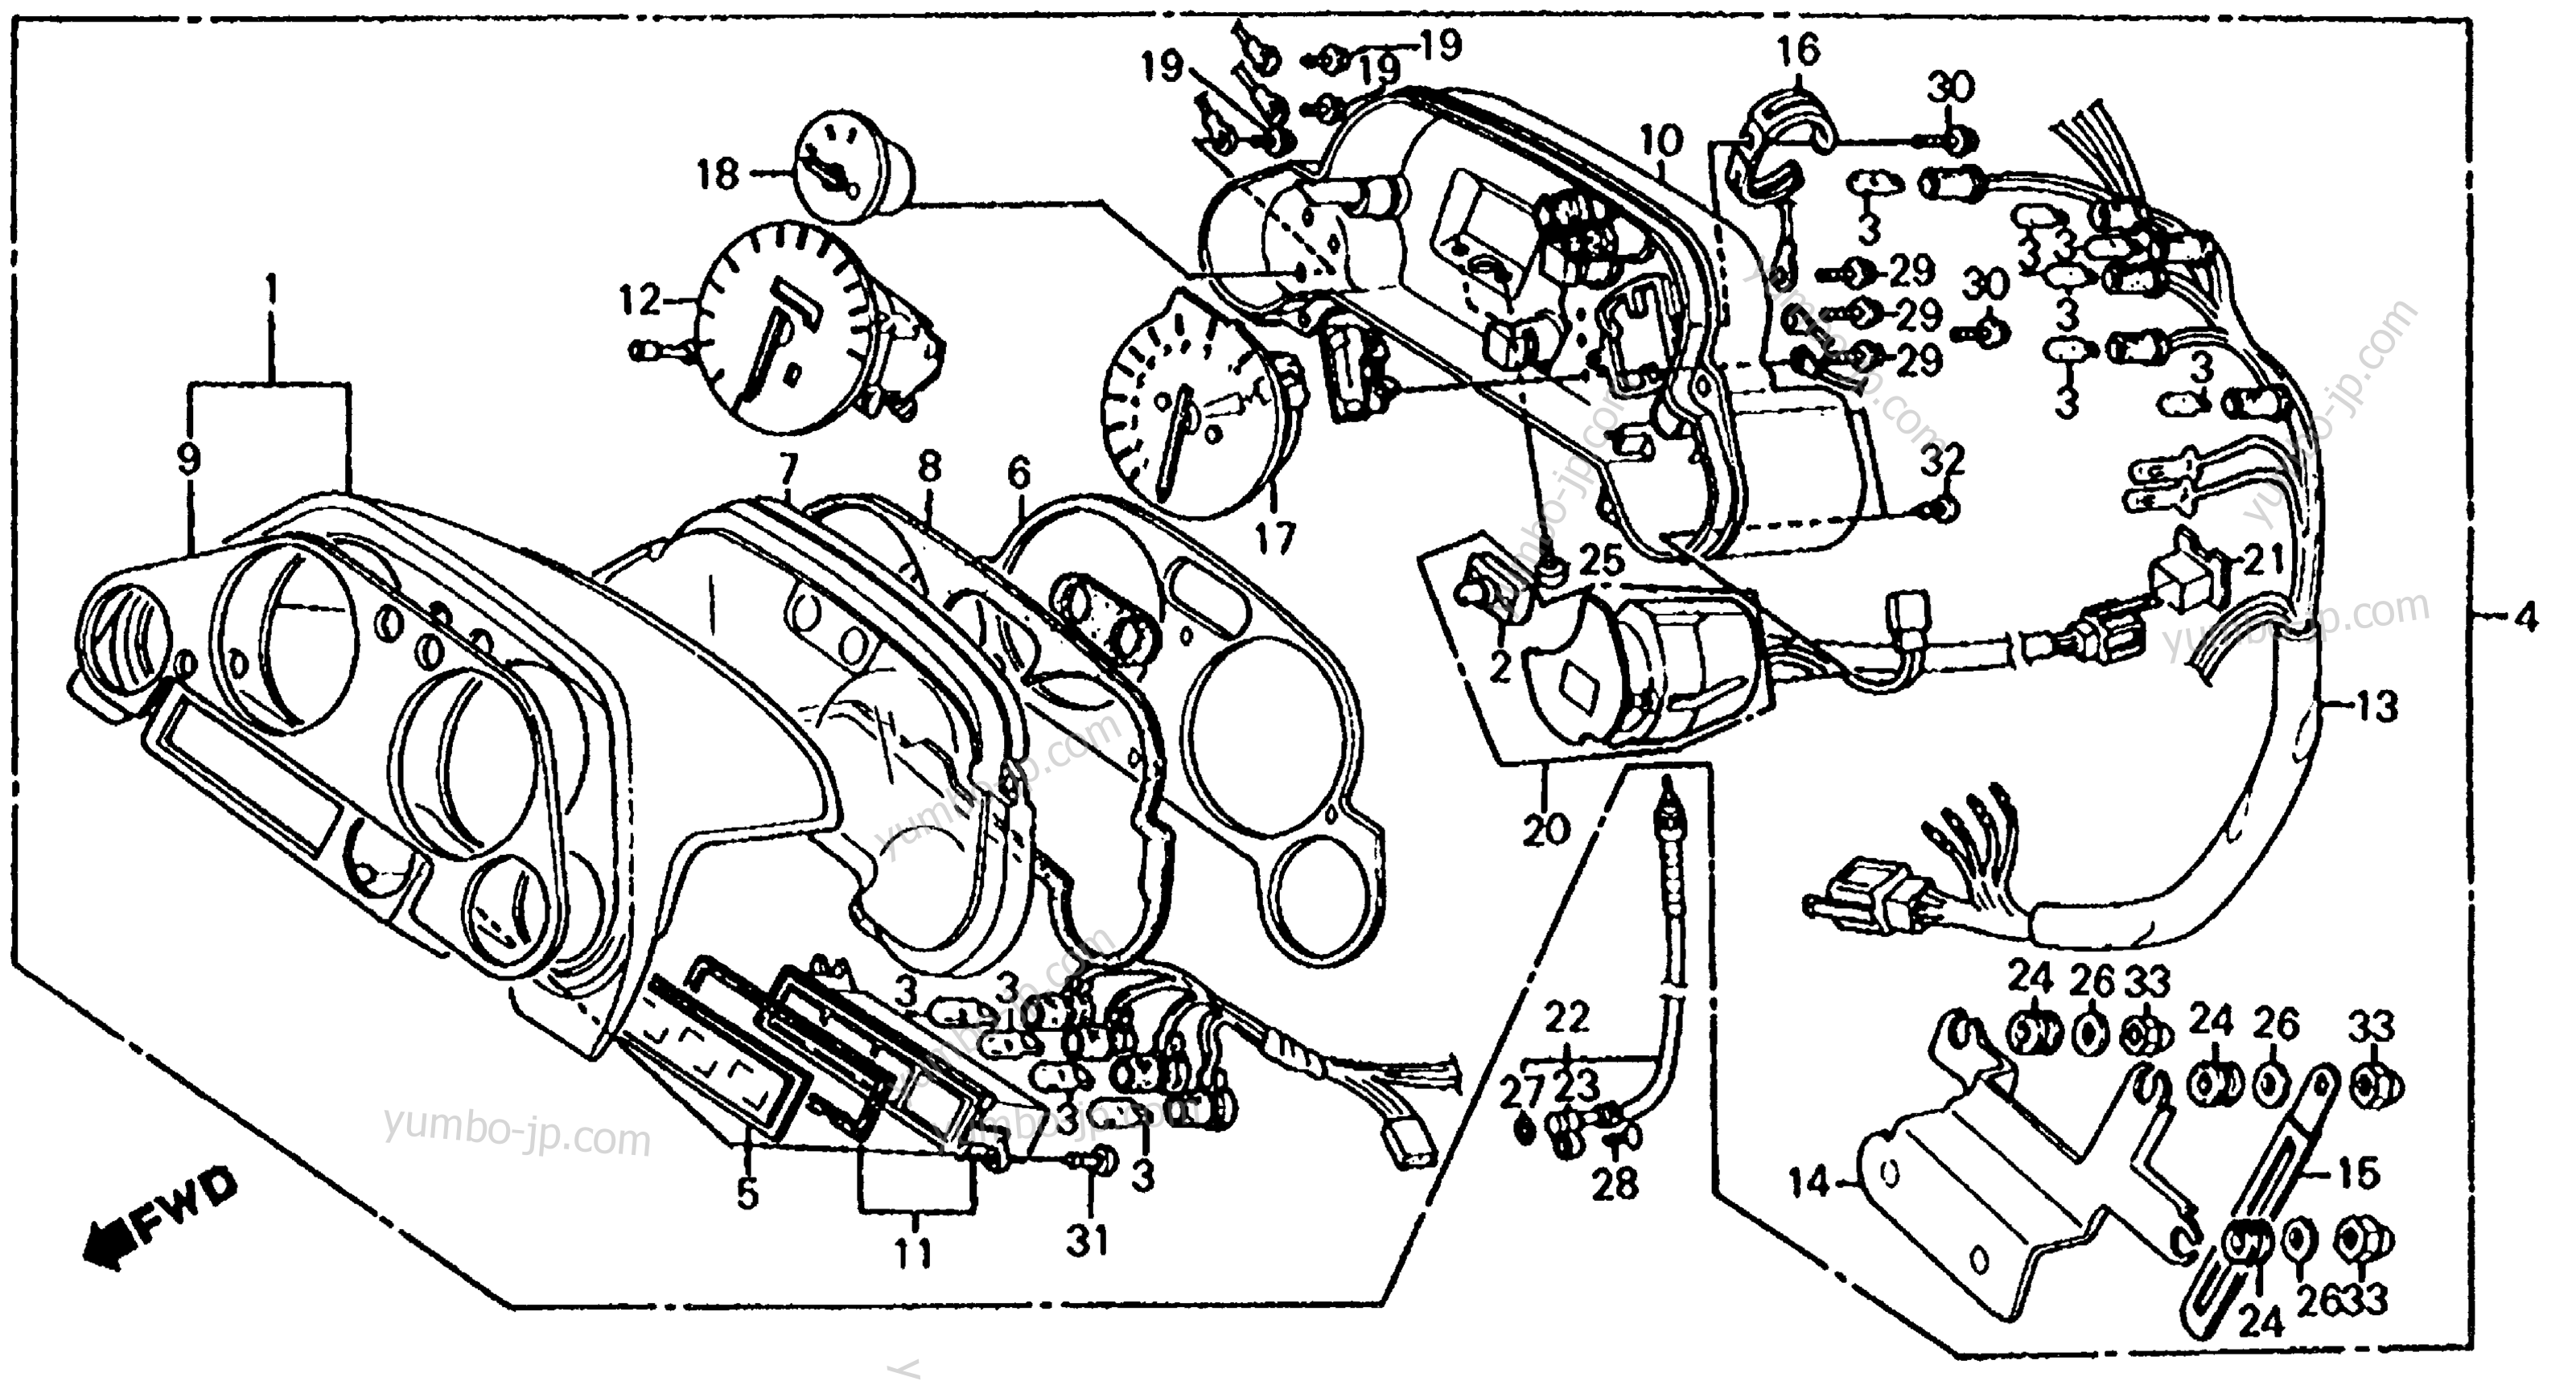 INSTRUMENTS for motorcycles HONDA CB700SC AC 1985 year